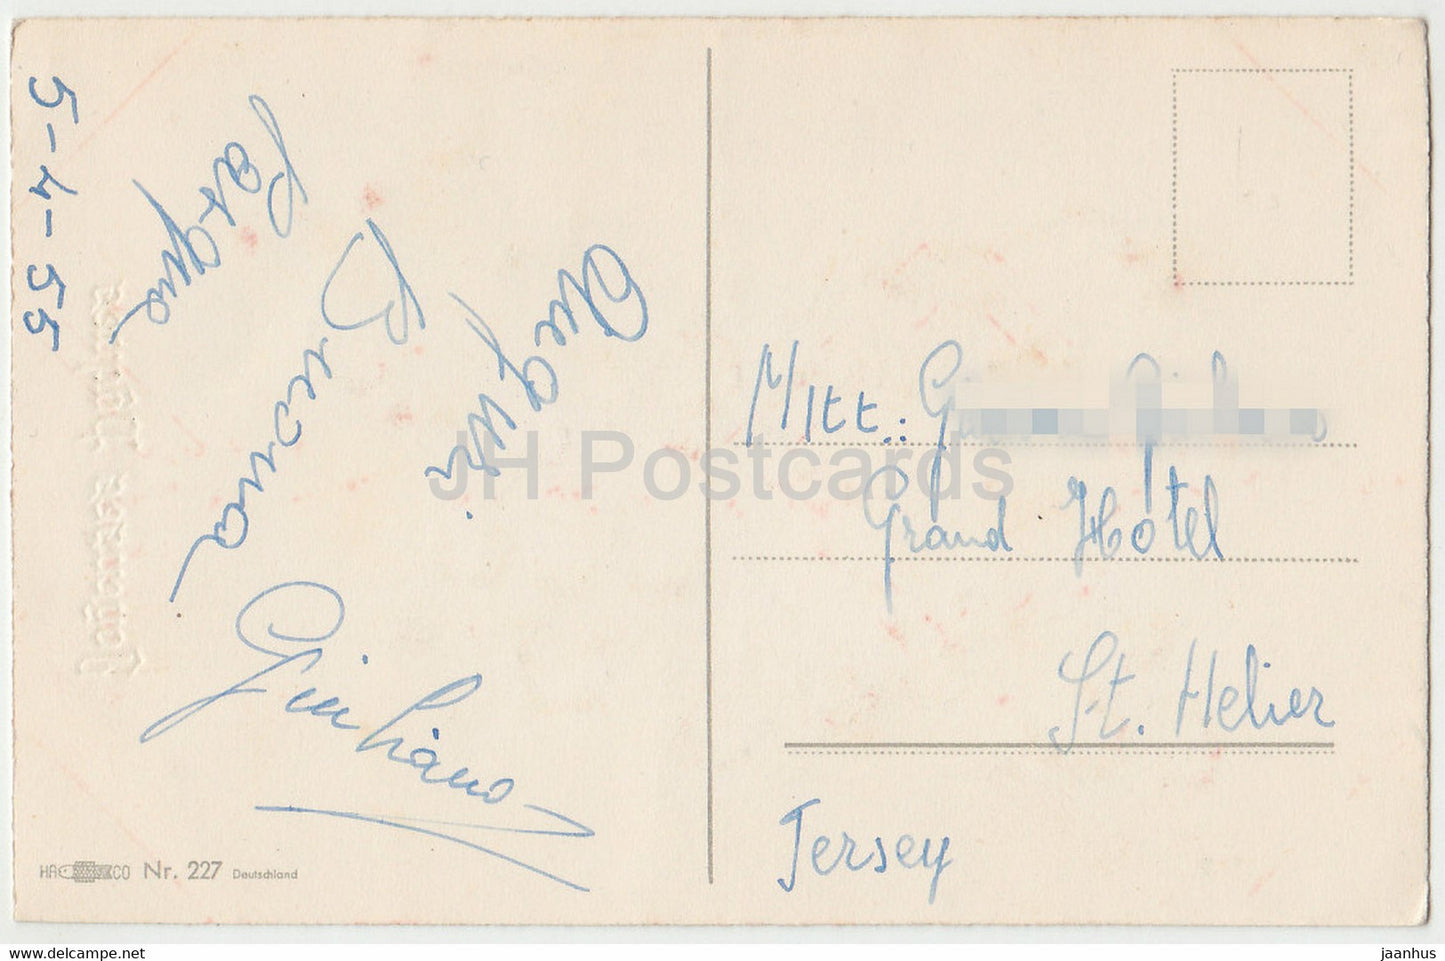 Ostergrußkarte – Joyeuses Paques – Blumen – Tulpen – HACO – 227 Illustration – alte Postkarte 1955 – Frankreich – gebraucht